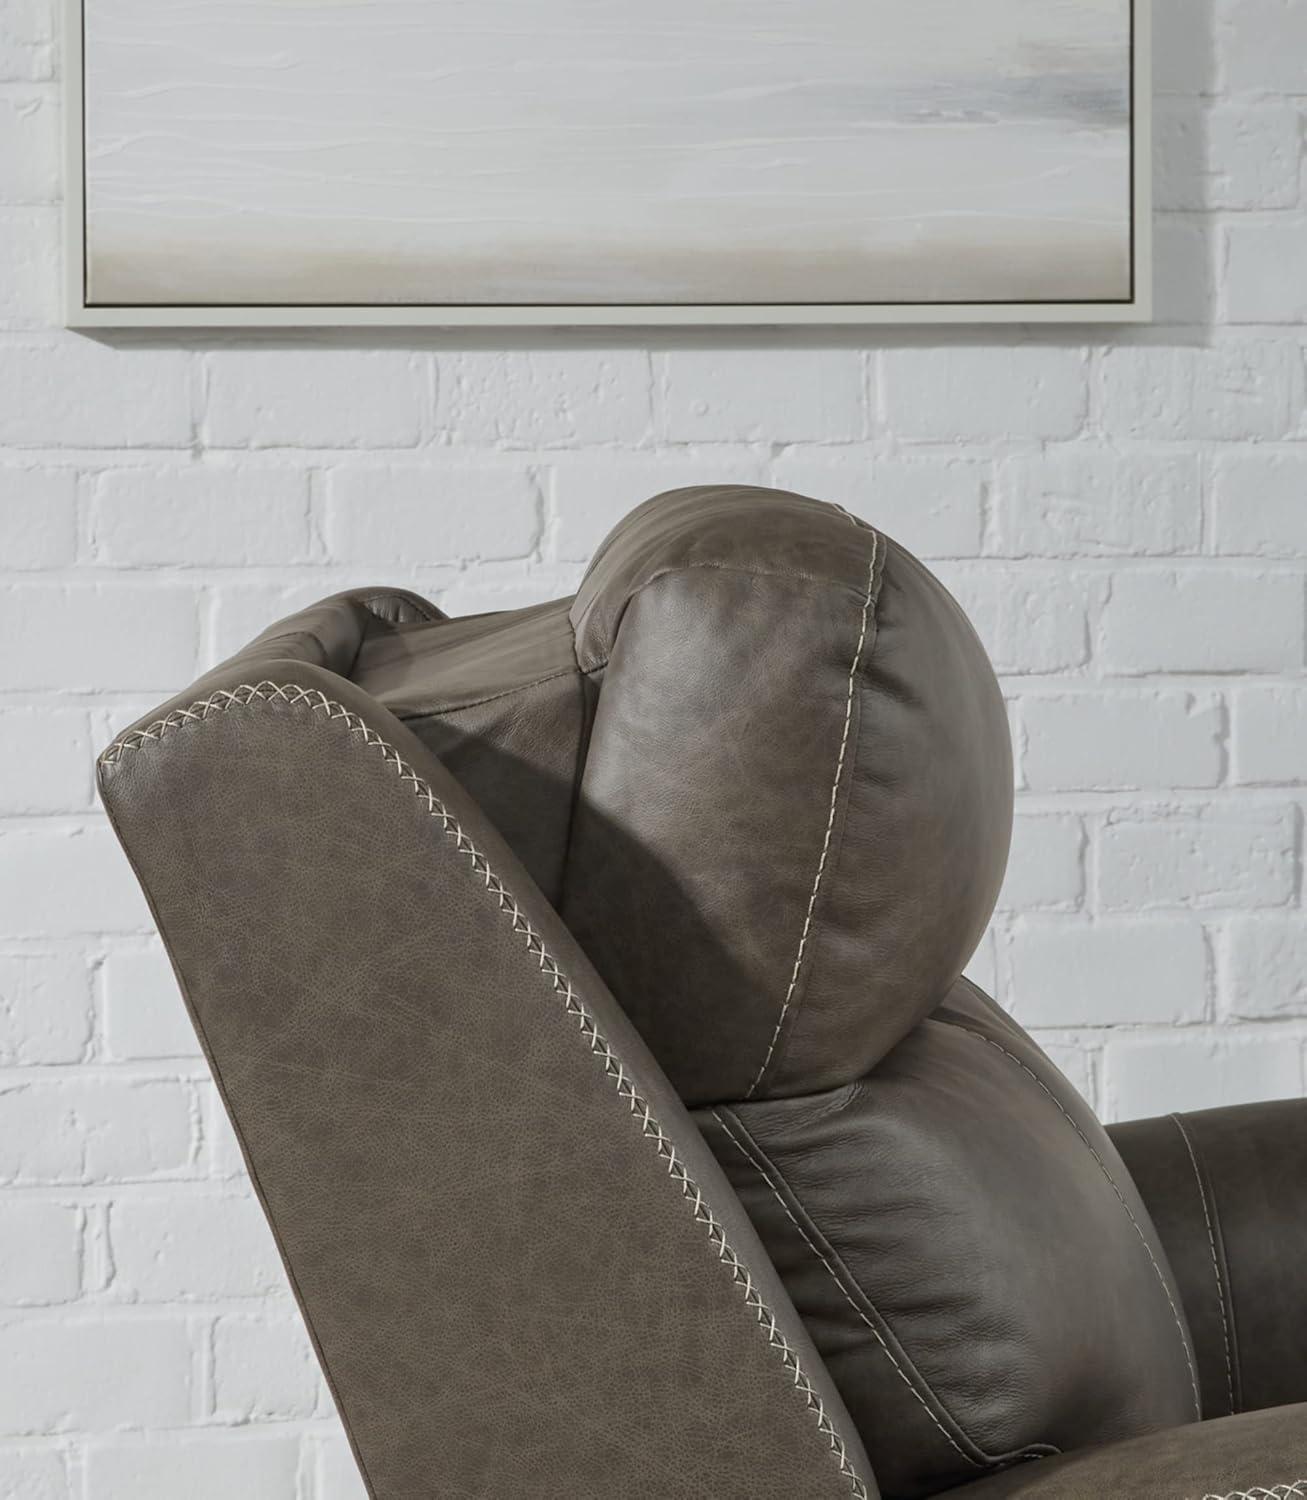 Roman 102'' Smoke Gray Faux Leather Power Reclining Sofa